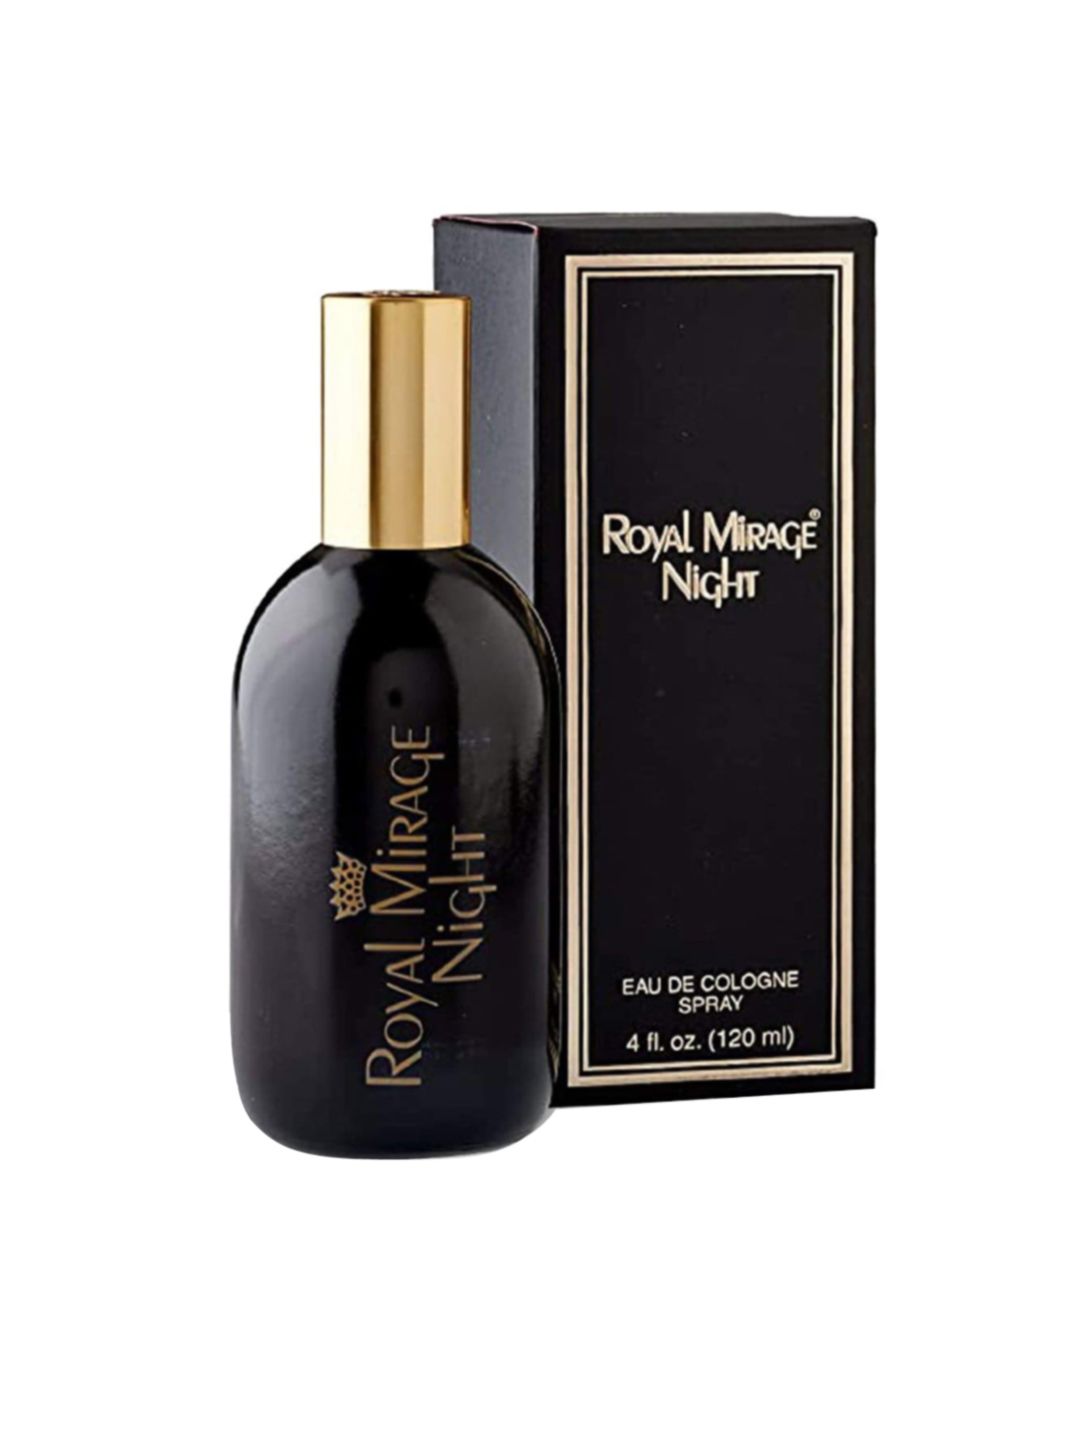 Royal Mirage Men Night Eau De Cologne Perfume 120ml Price in India